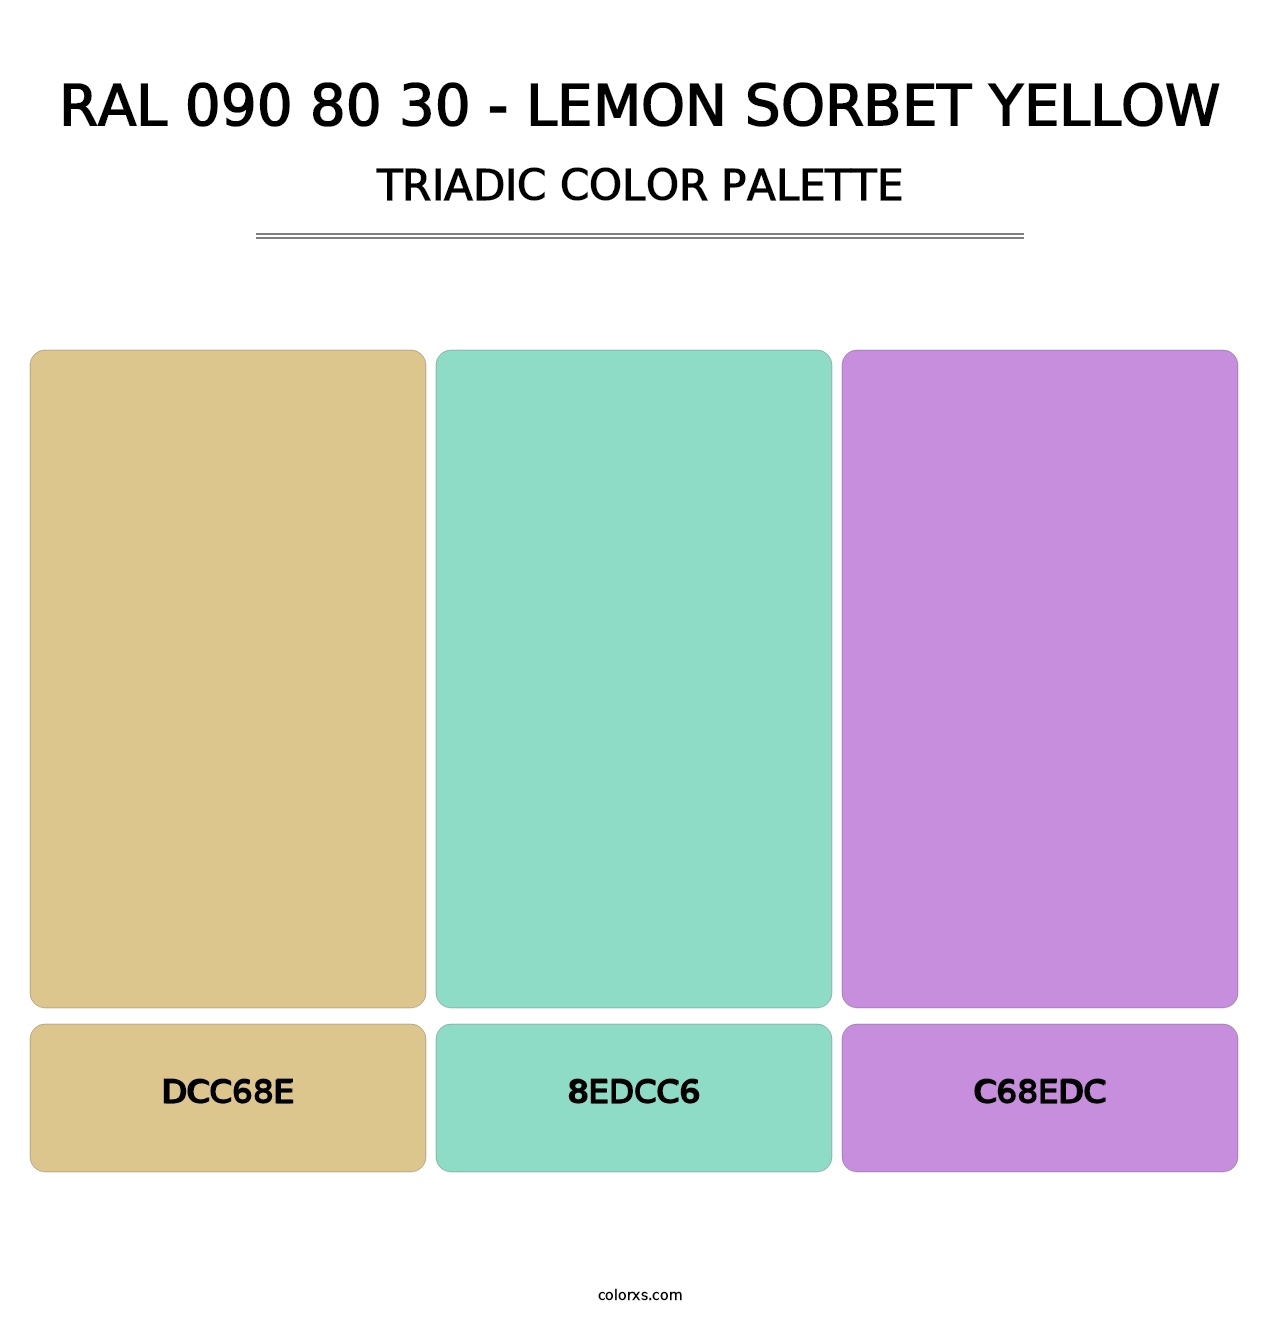 RAL 090 80 30 - Lemon Sorbet Yellow - Triadic Color Palette